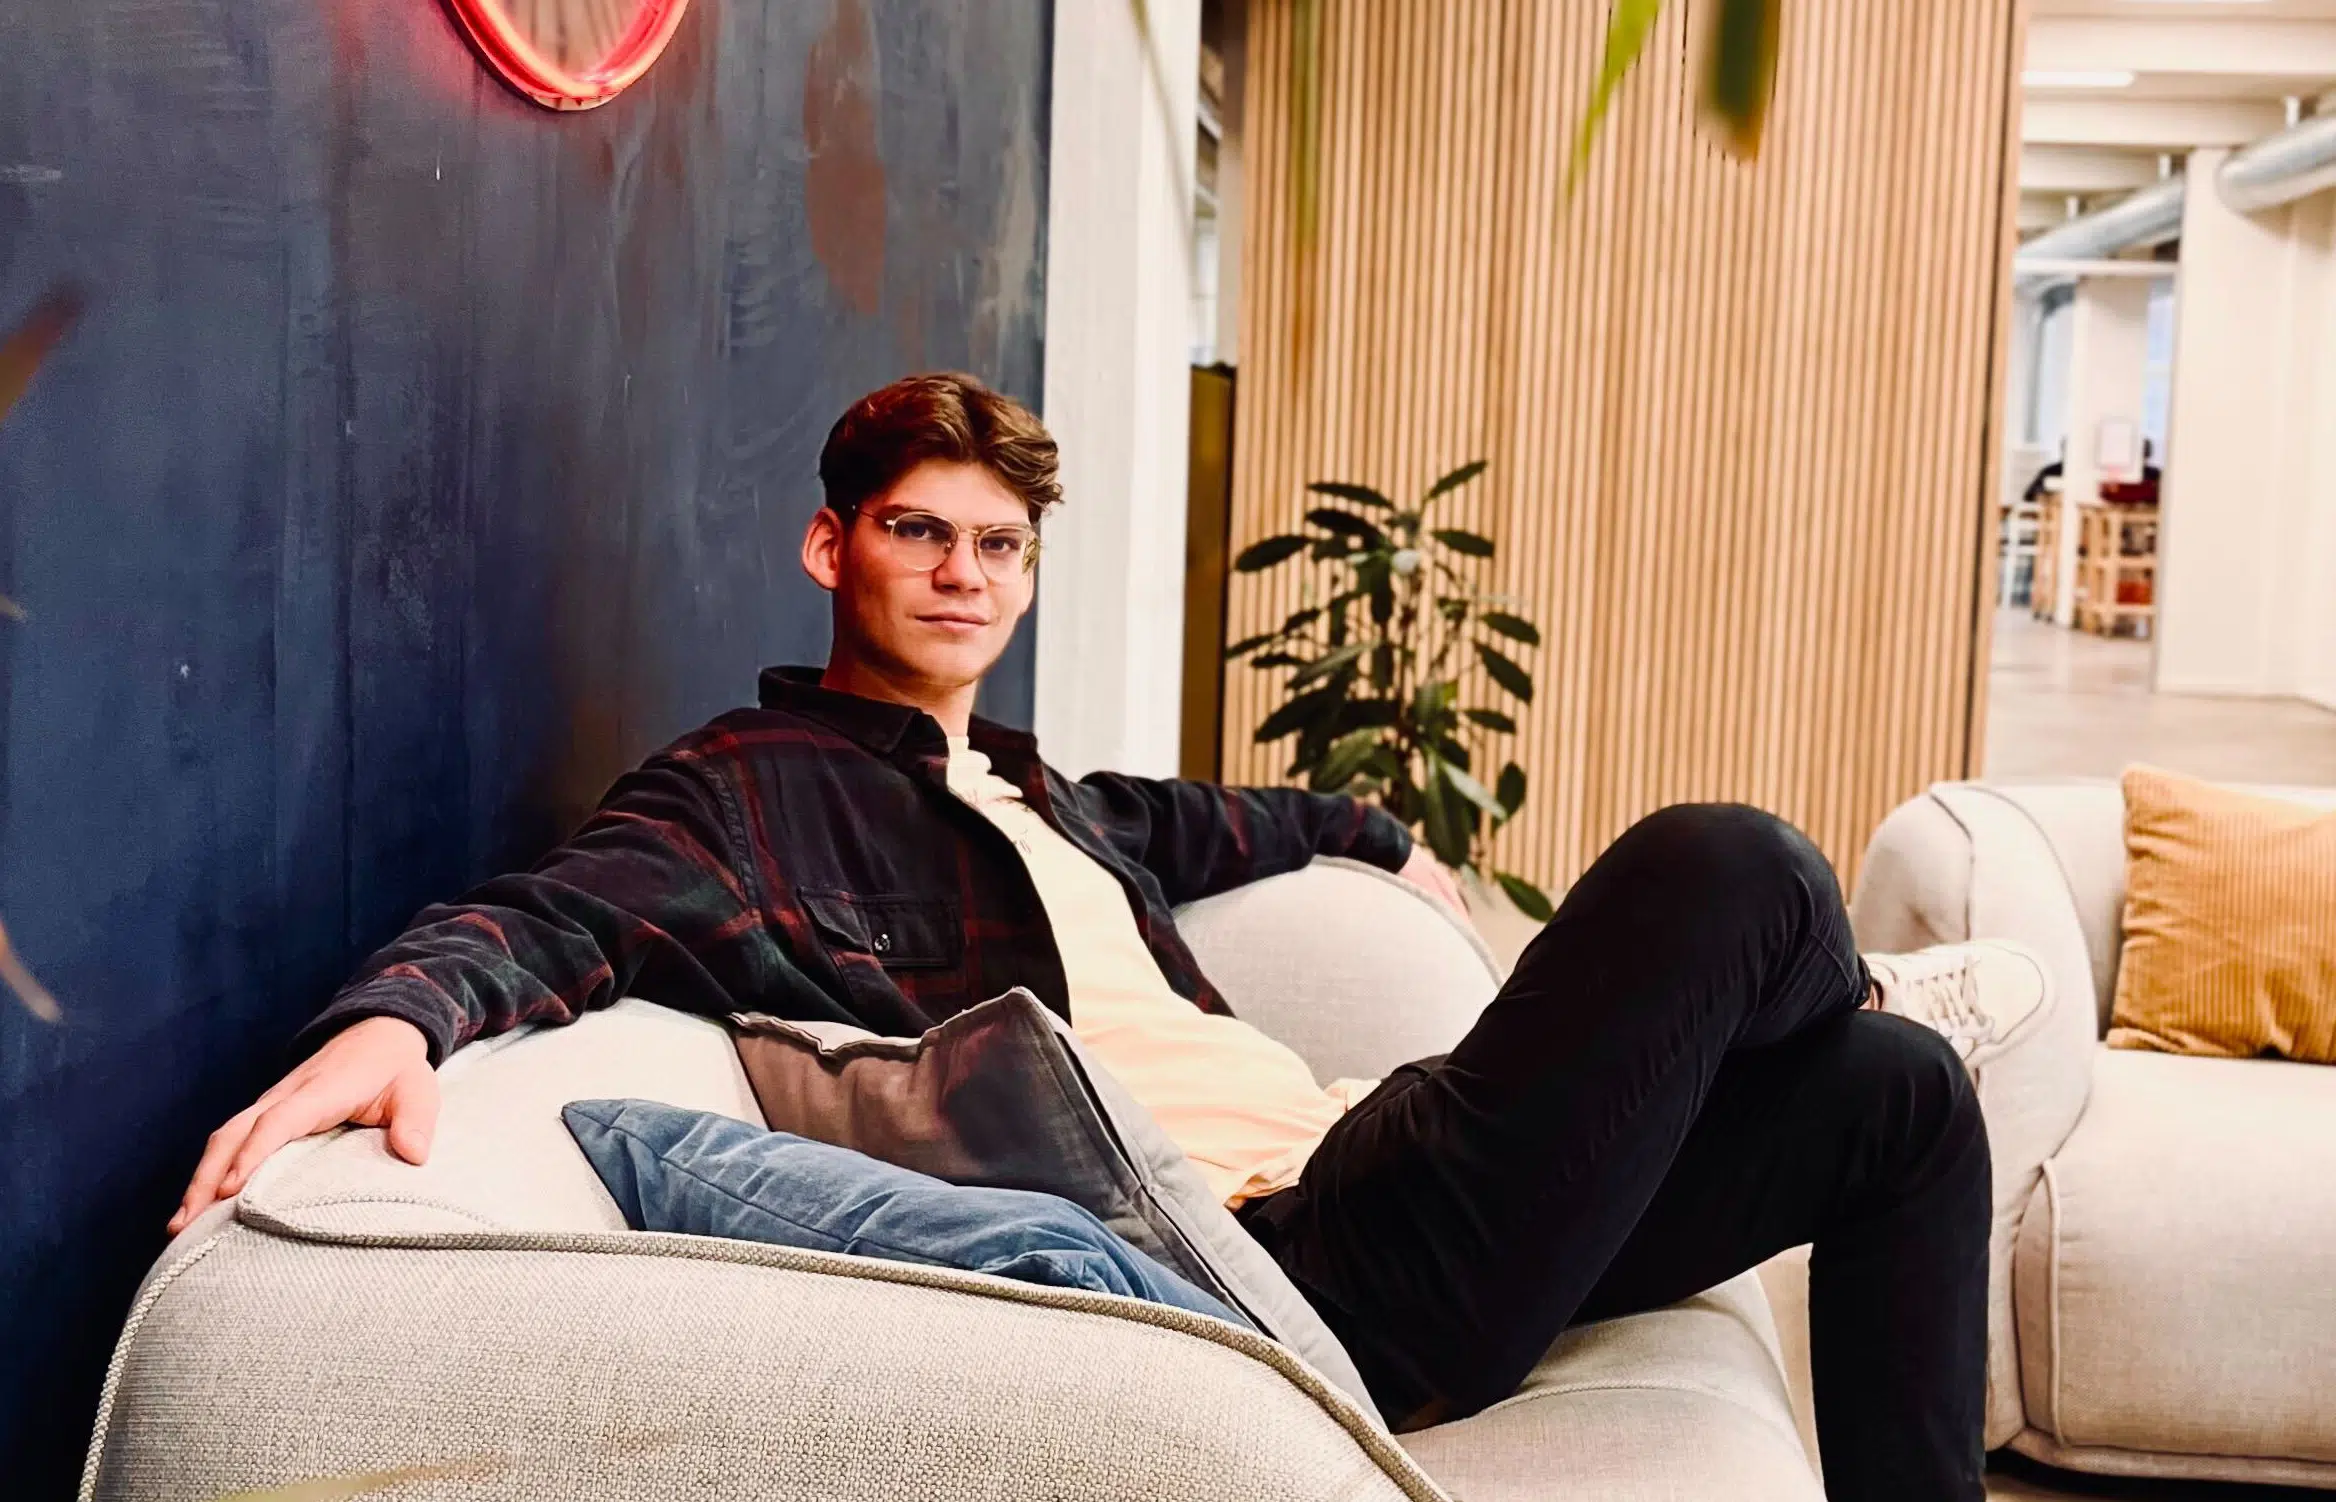 Kasper Nikolajsen Dahl, UX/UI designer at Twentyfour, is sitting in a couch.